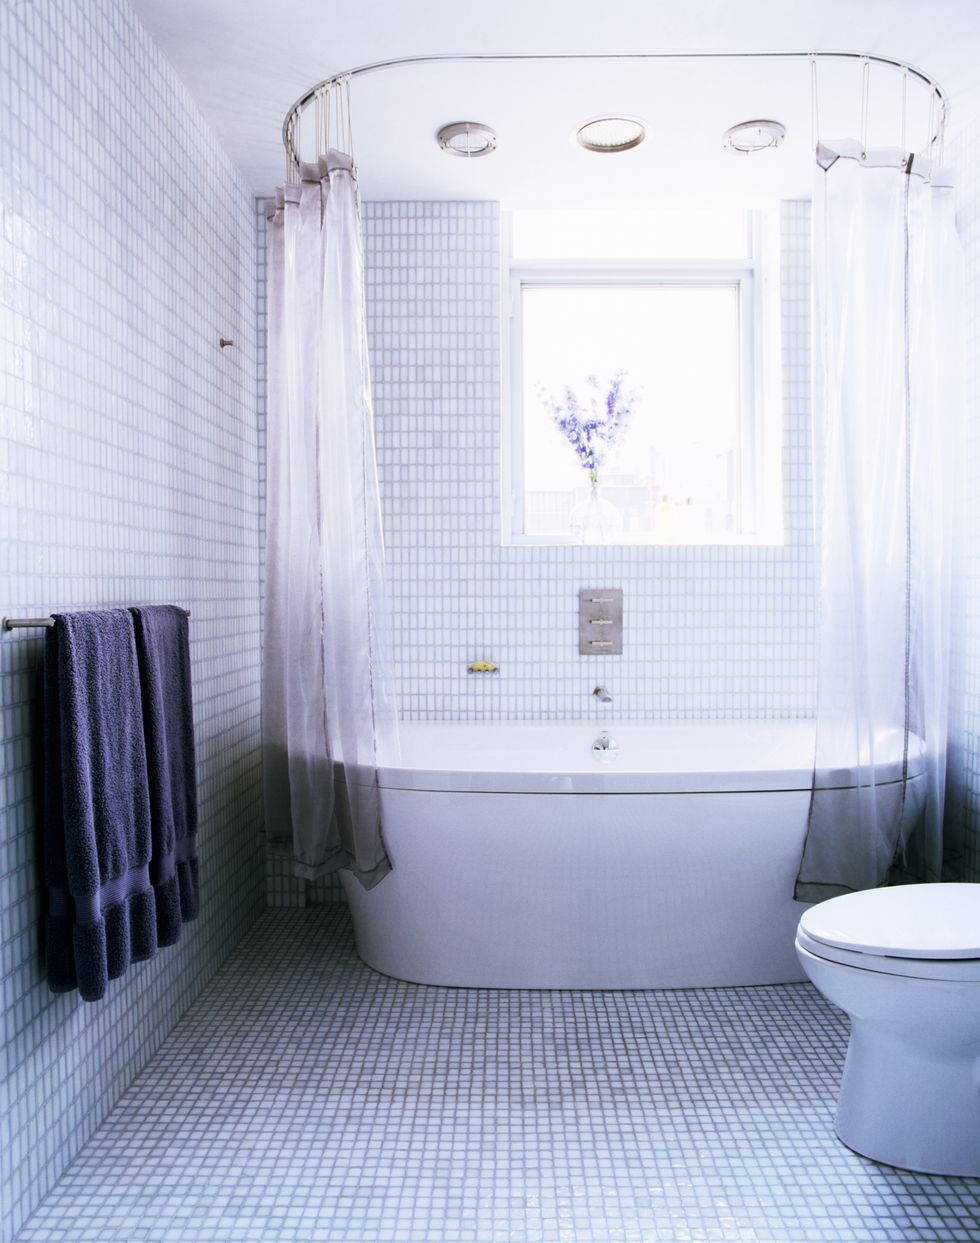 light blue tiled bathroom with white bathtub by window